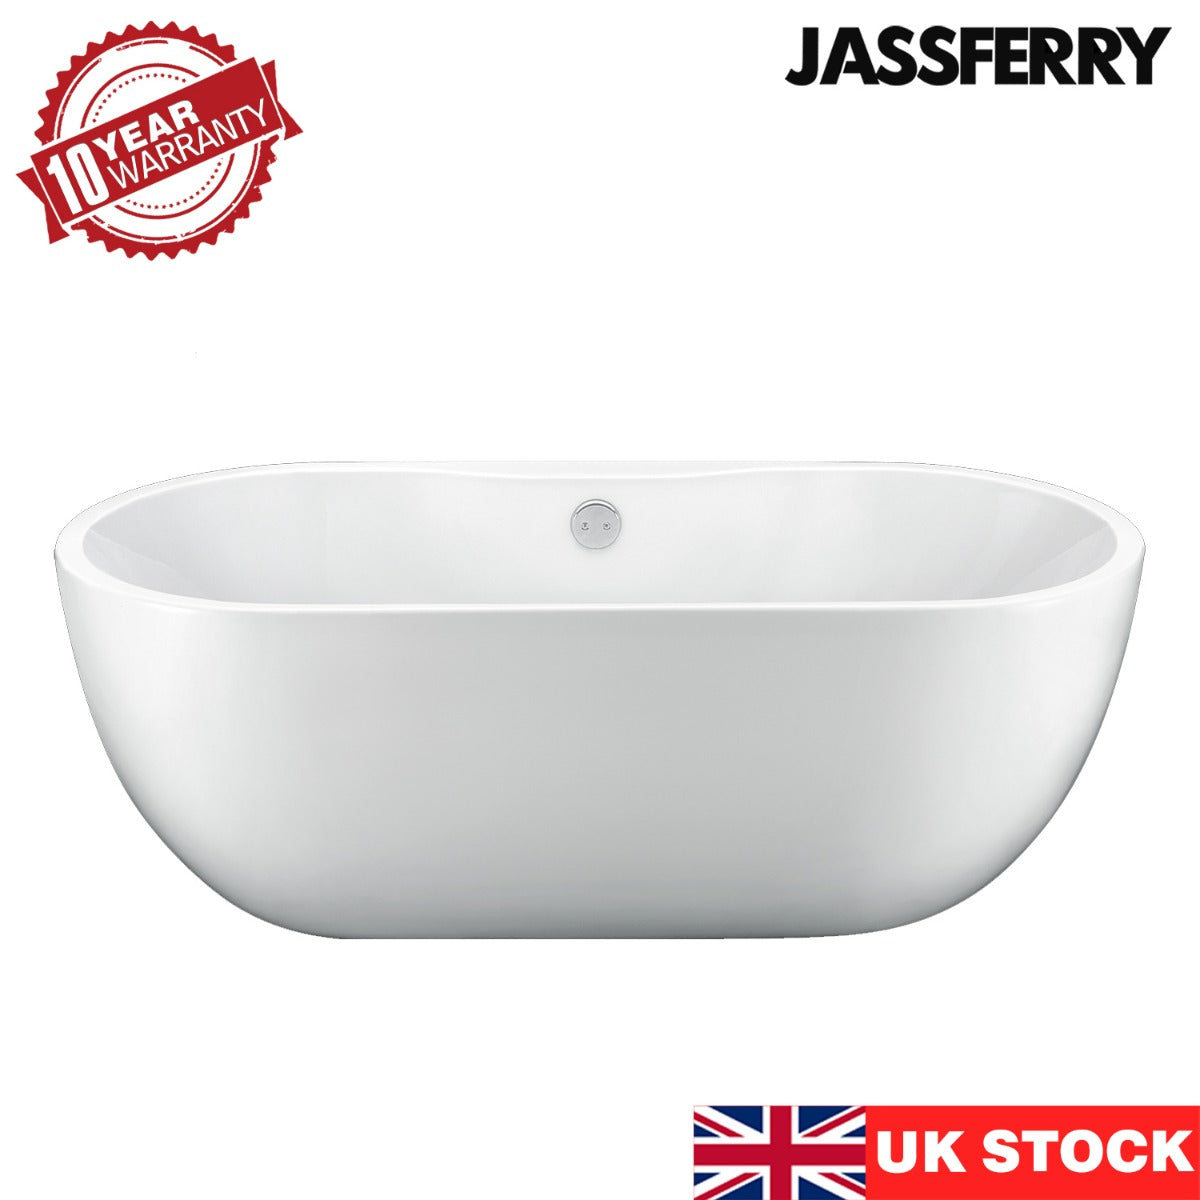 JassferryJASSFERRY Modern Freestanding Bathtub White Gloss Soaking Baths Acrylic 1800×750Bathtubs